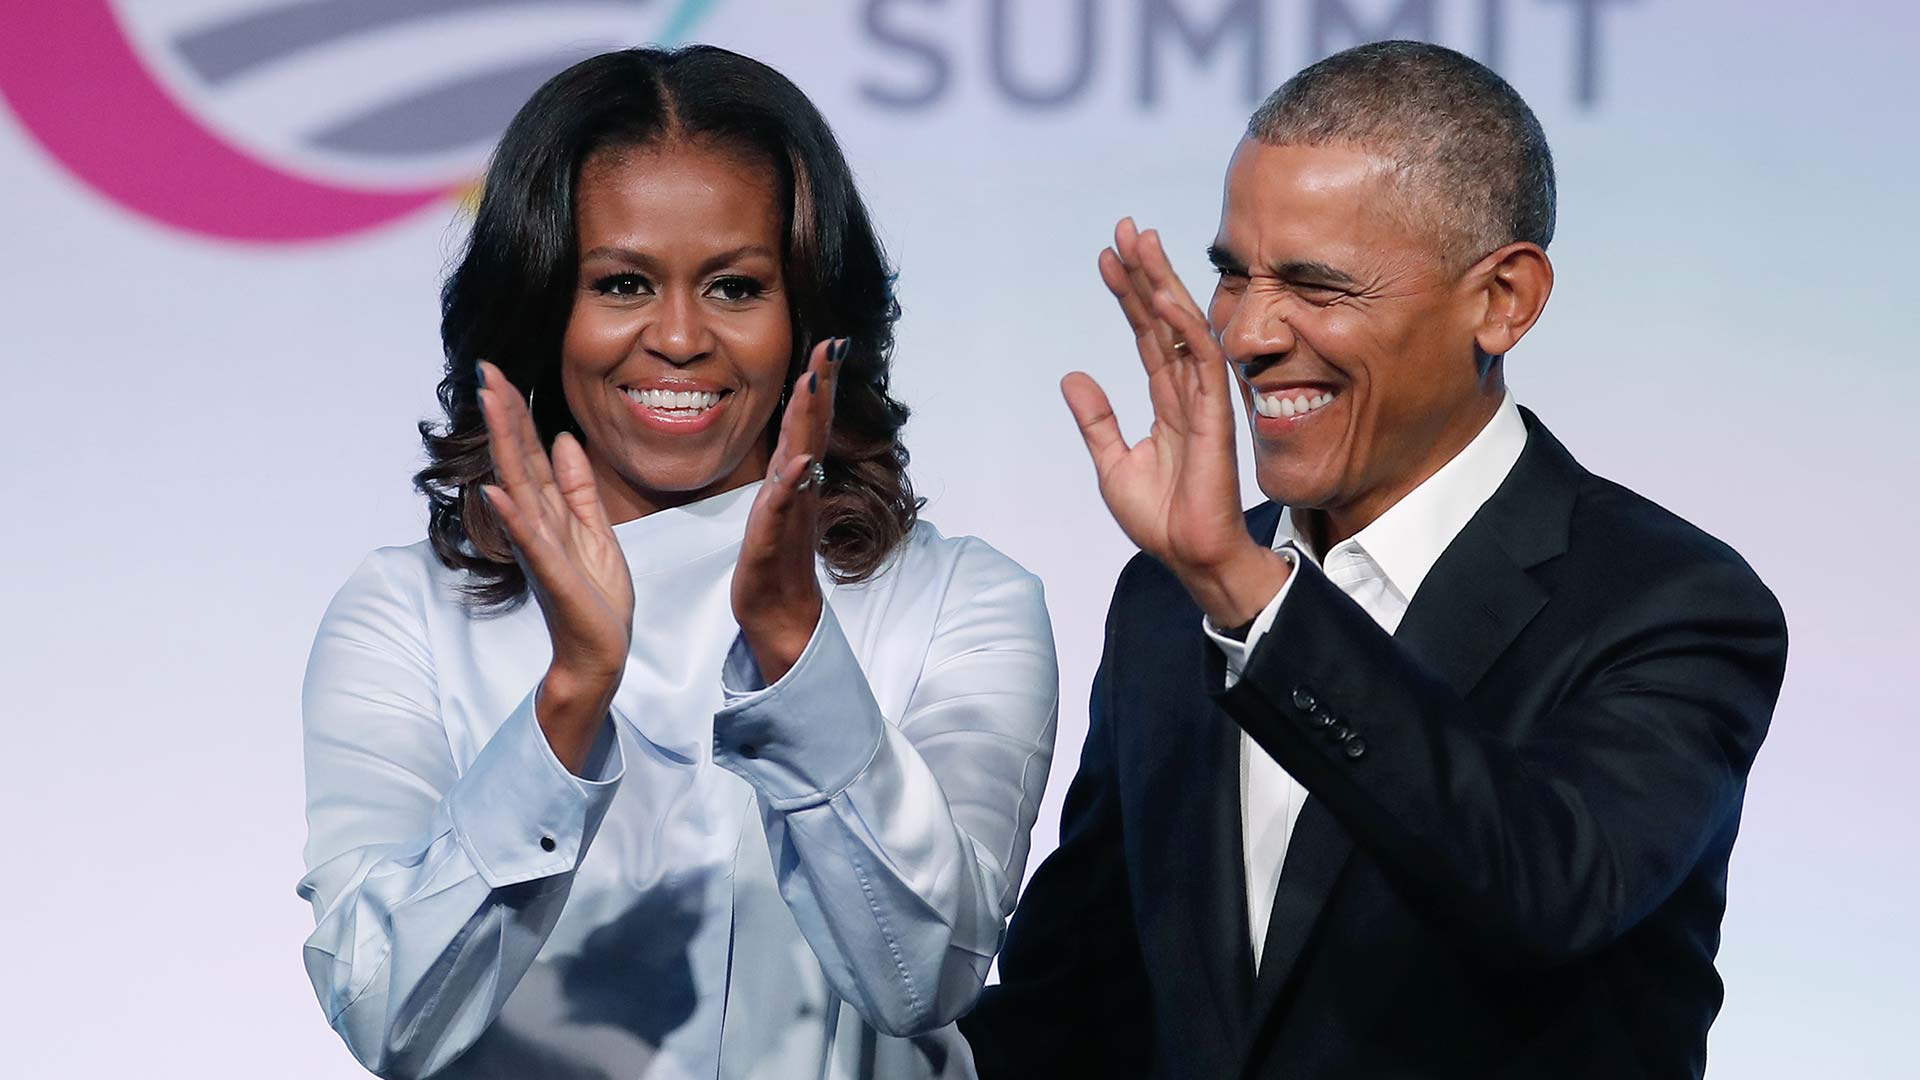 Barack y Michelle Obama producirán contenido para Netflix